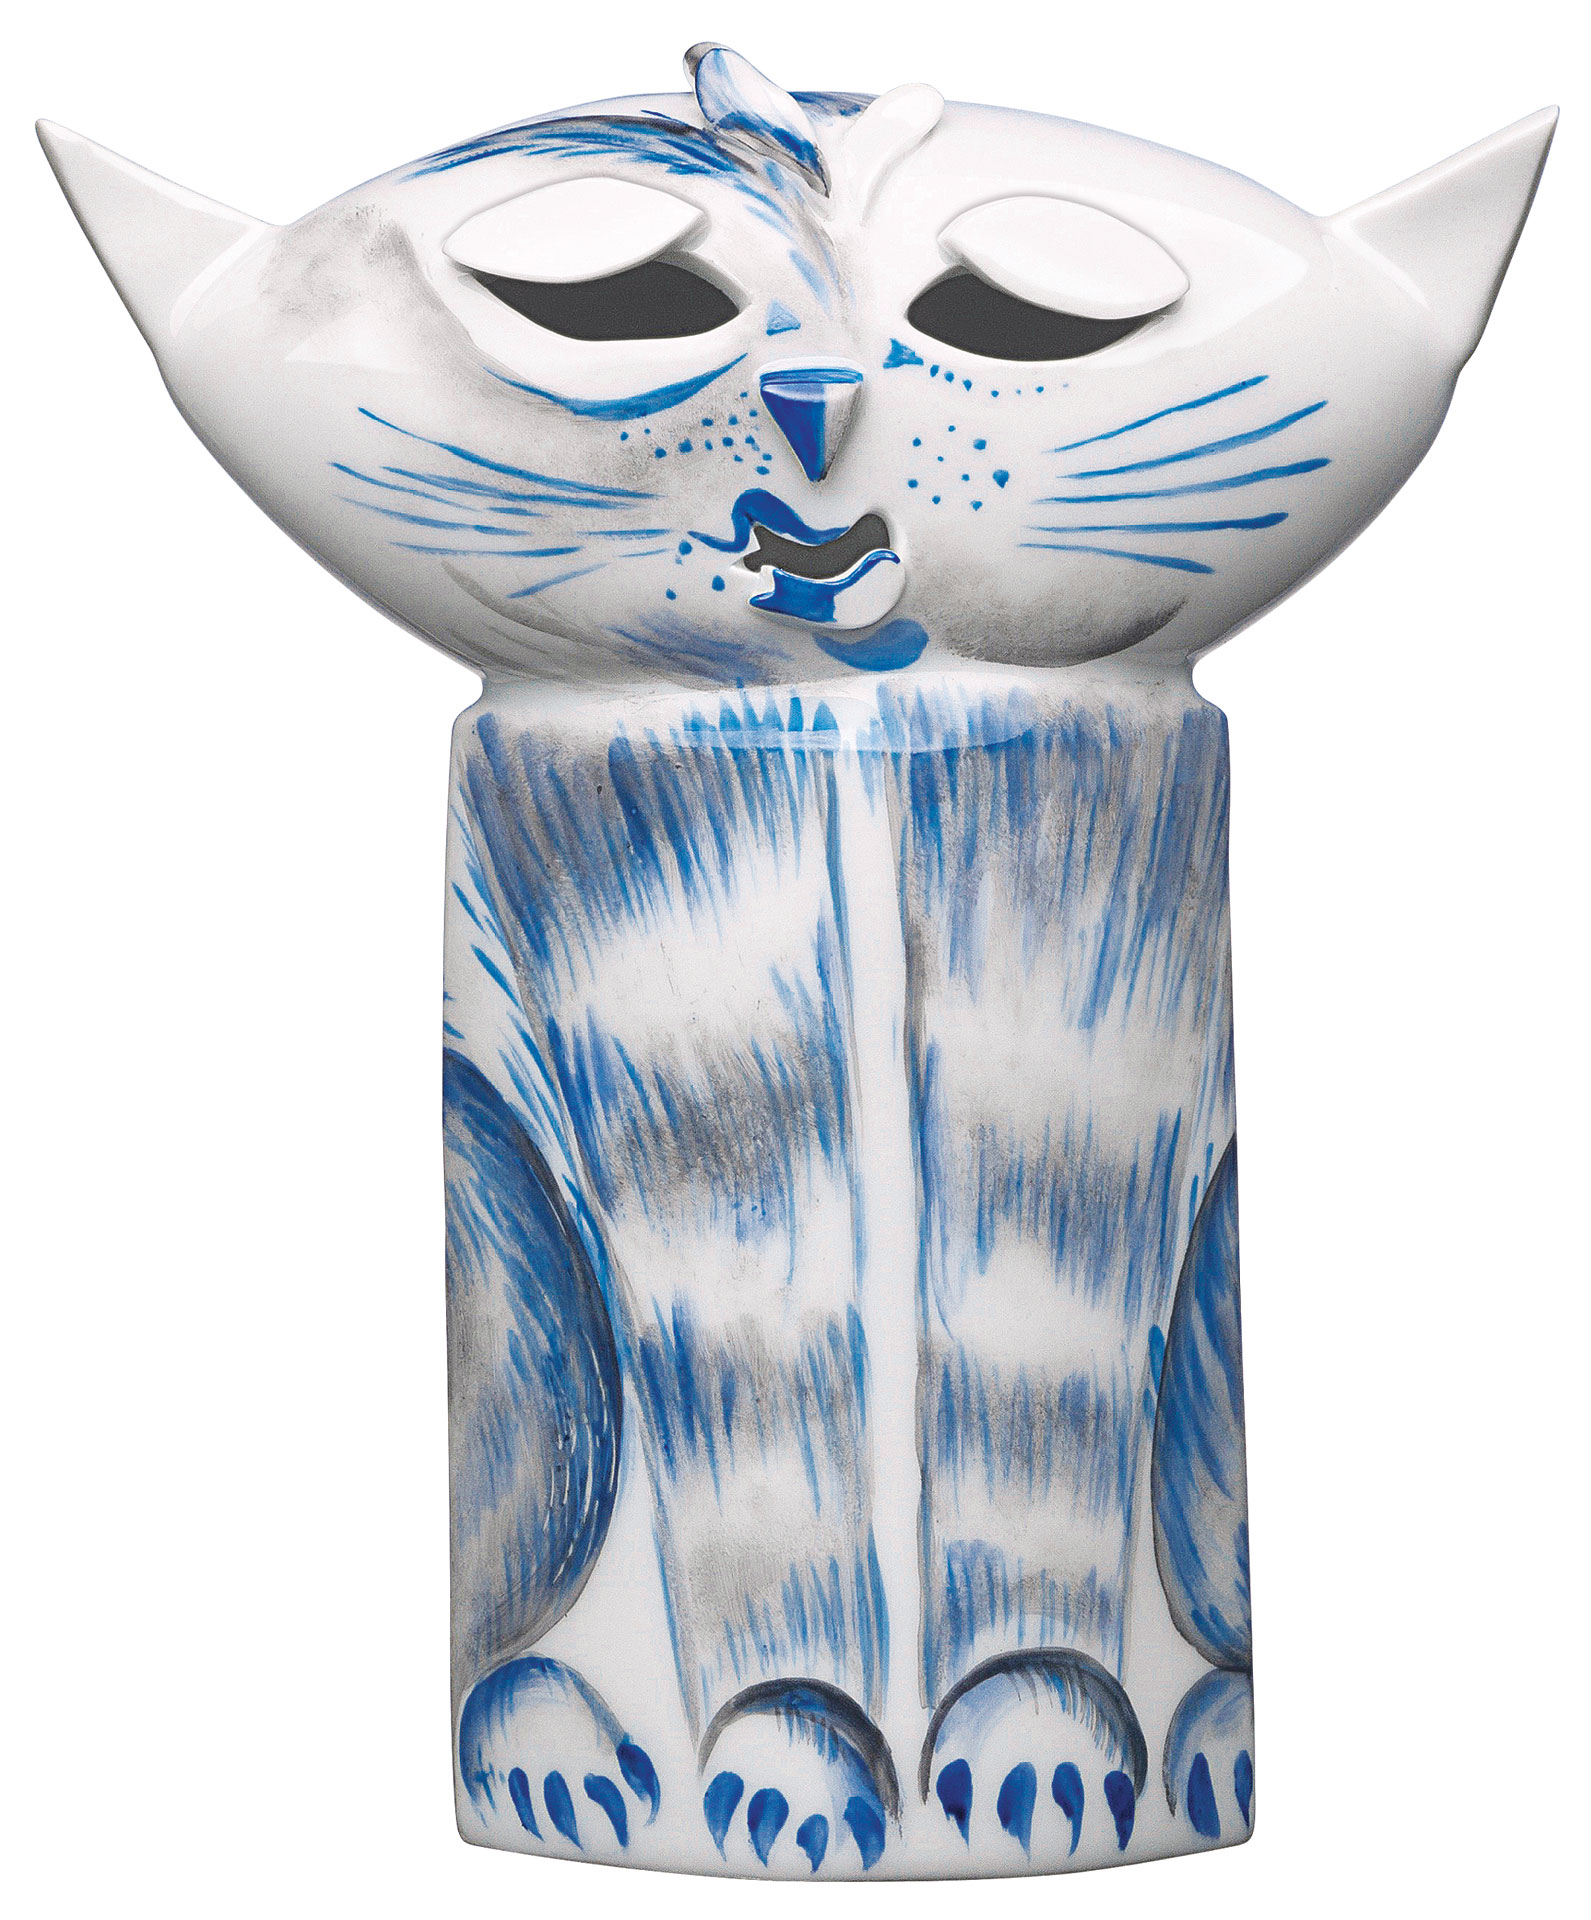 Sculpture "Cat", porcelain by Peter Strang